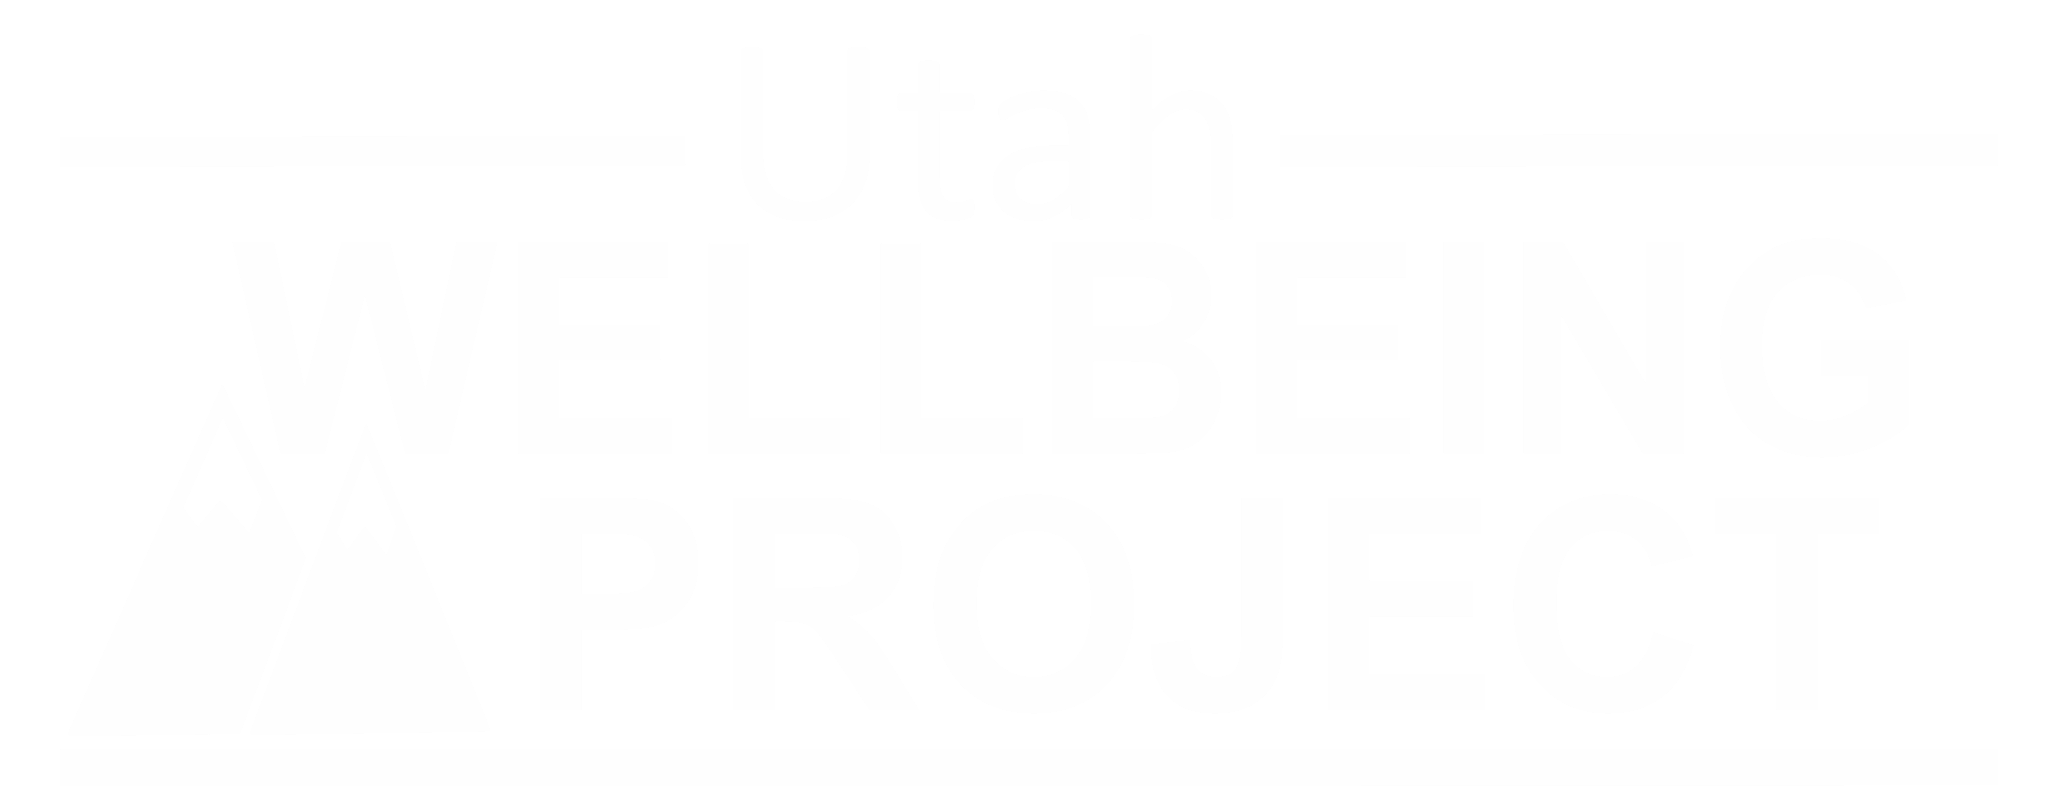 Utah Wellbeing Project logo